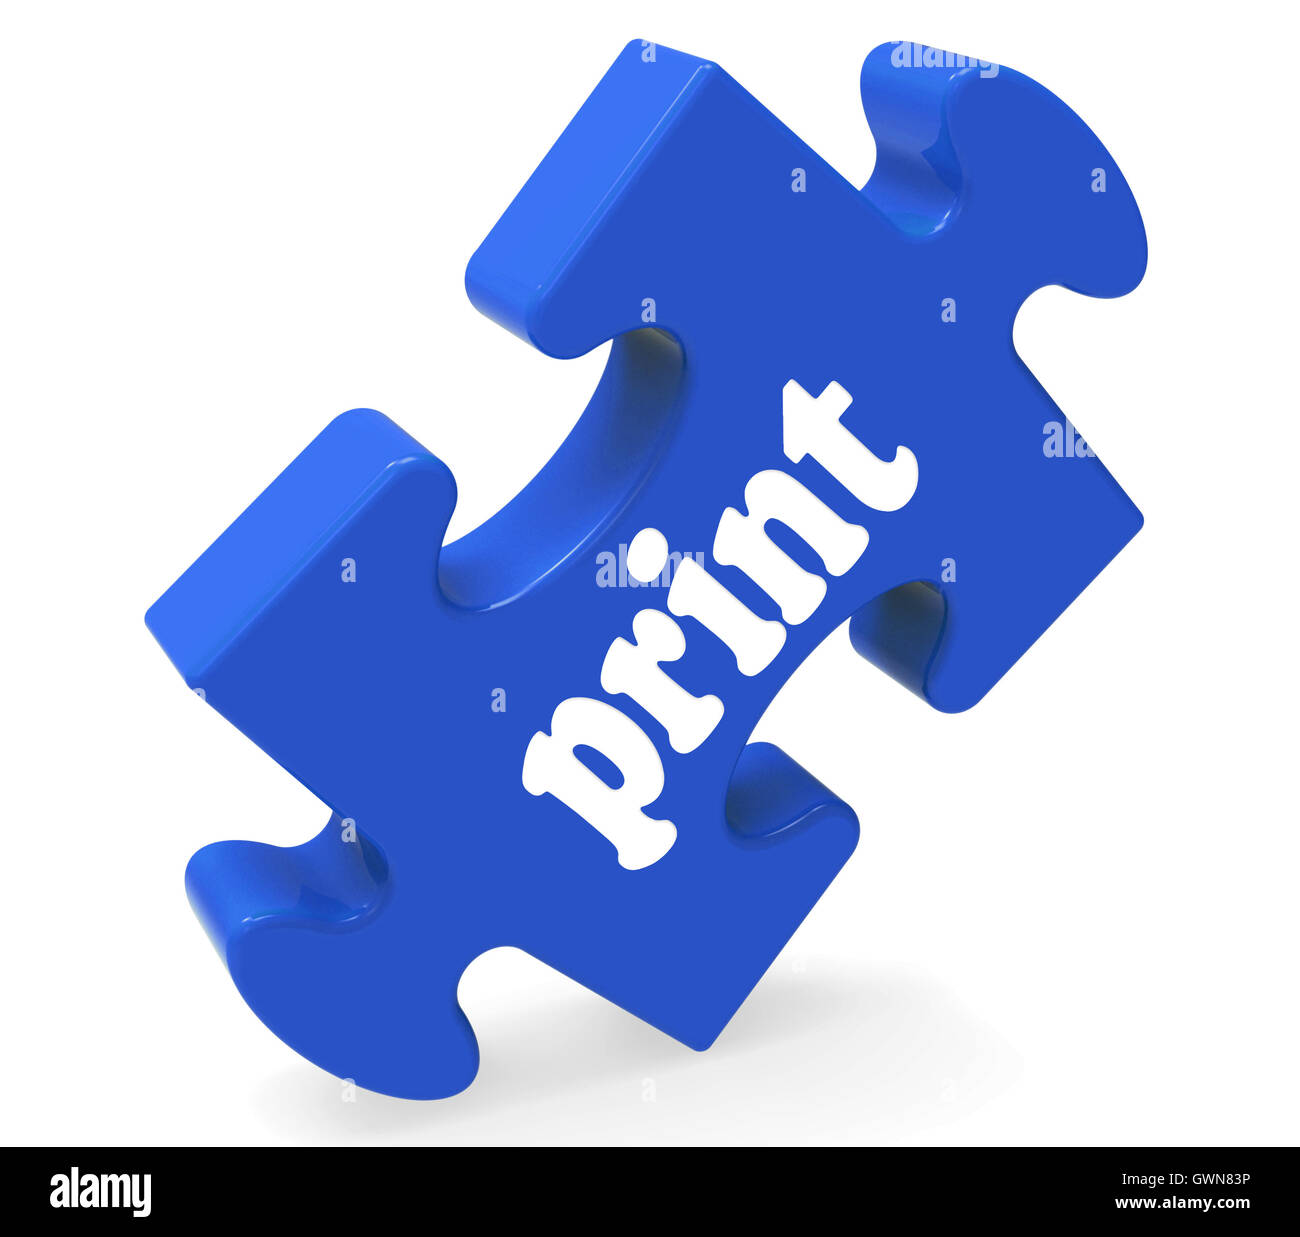 Print Key Shows Printing Copying Or Printout Stock Photo